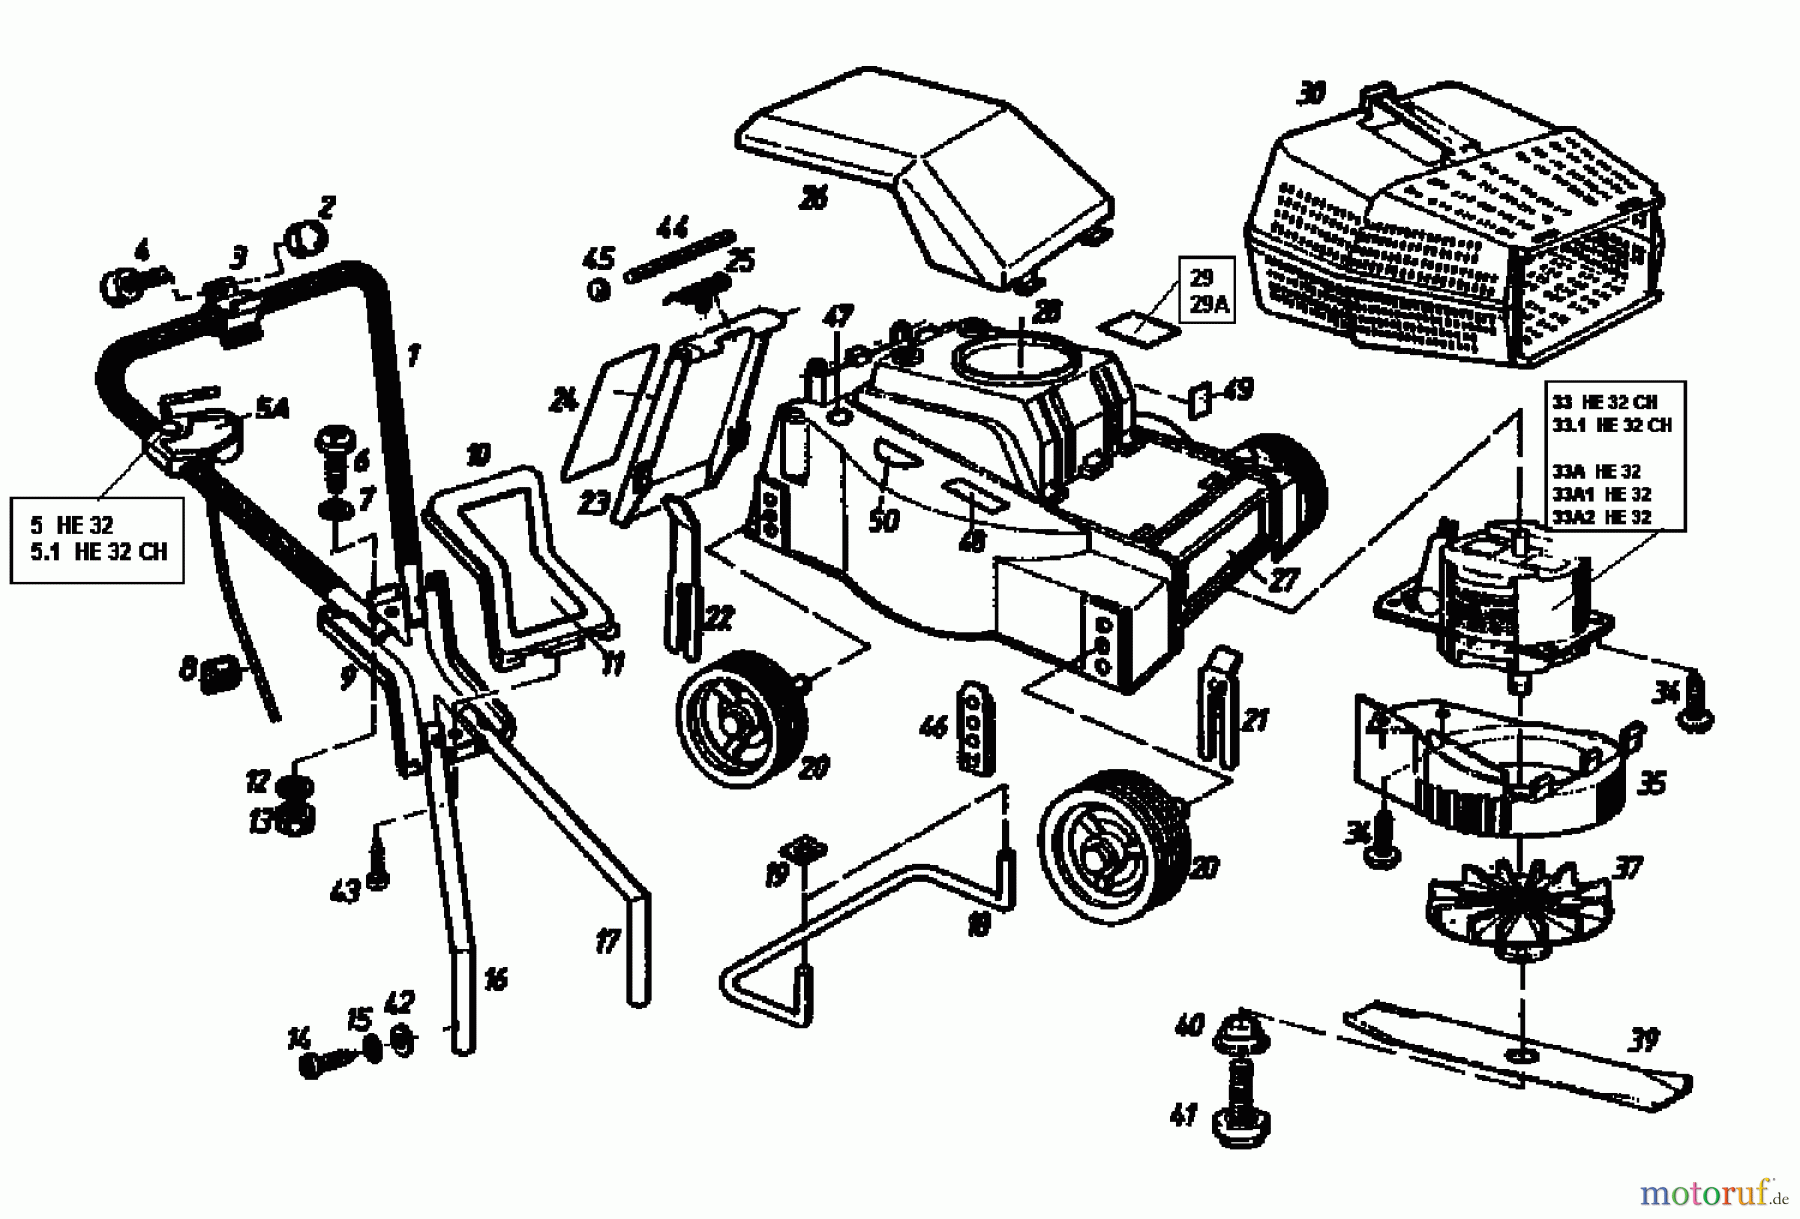  Gutbrod Electric mower HE 32 CH 02872.06  (1987) Basic machine